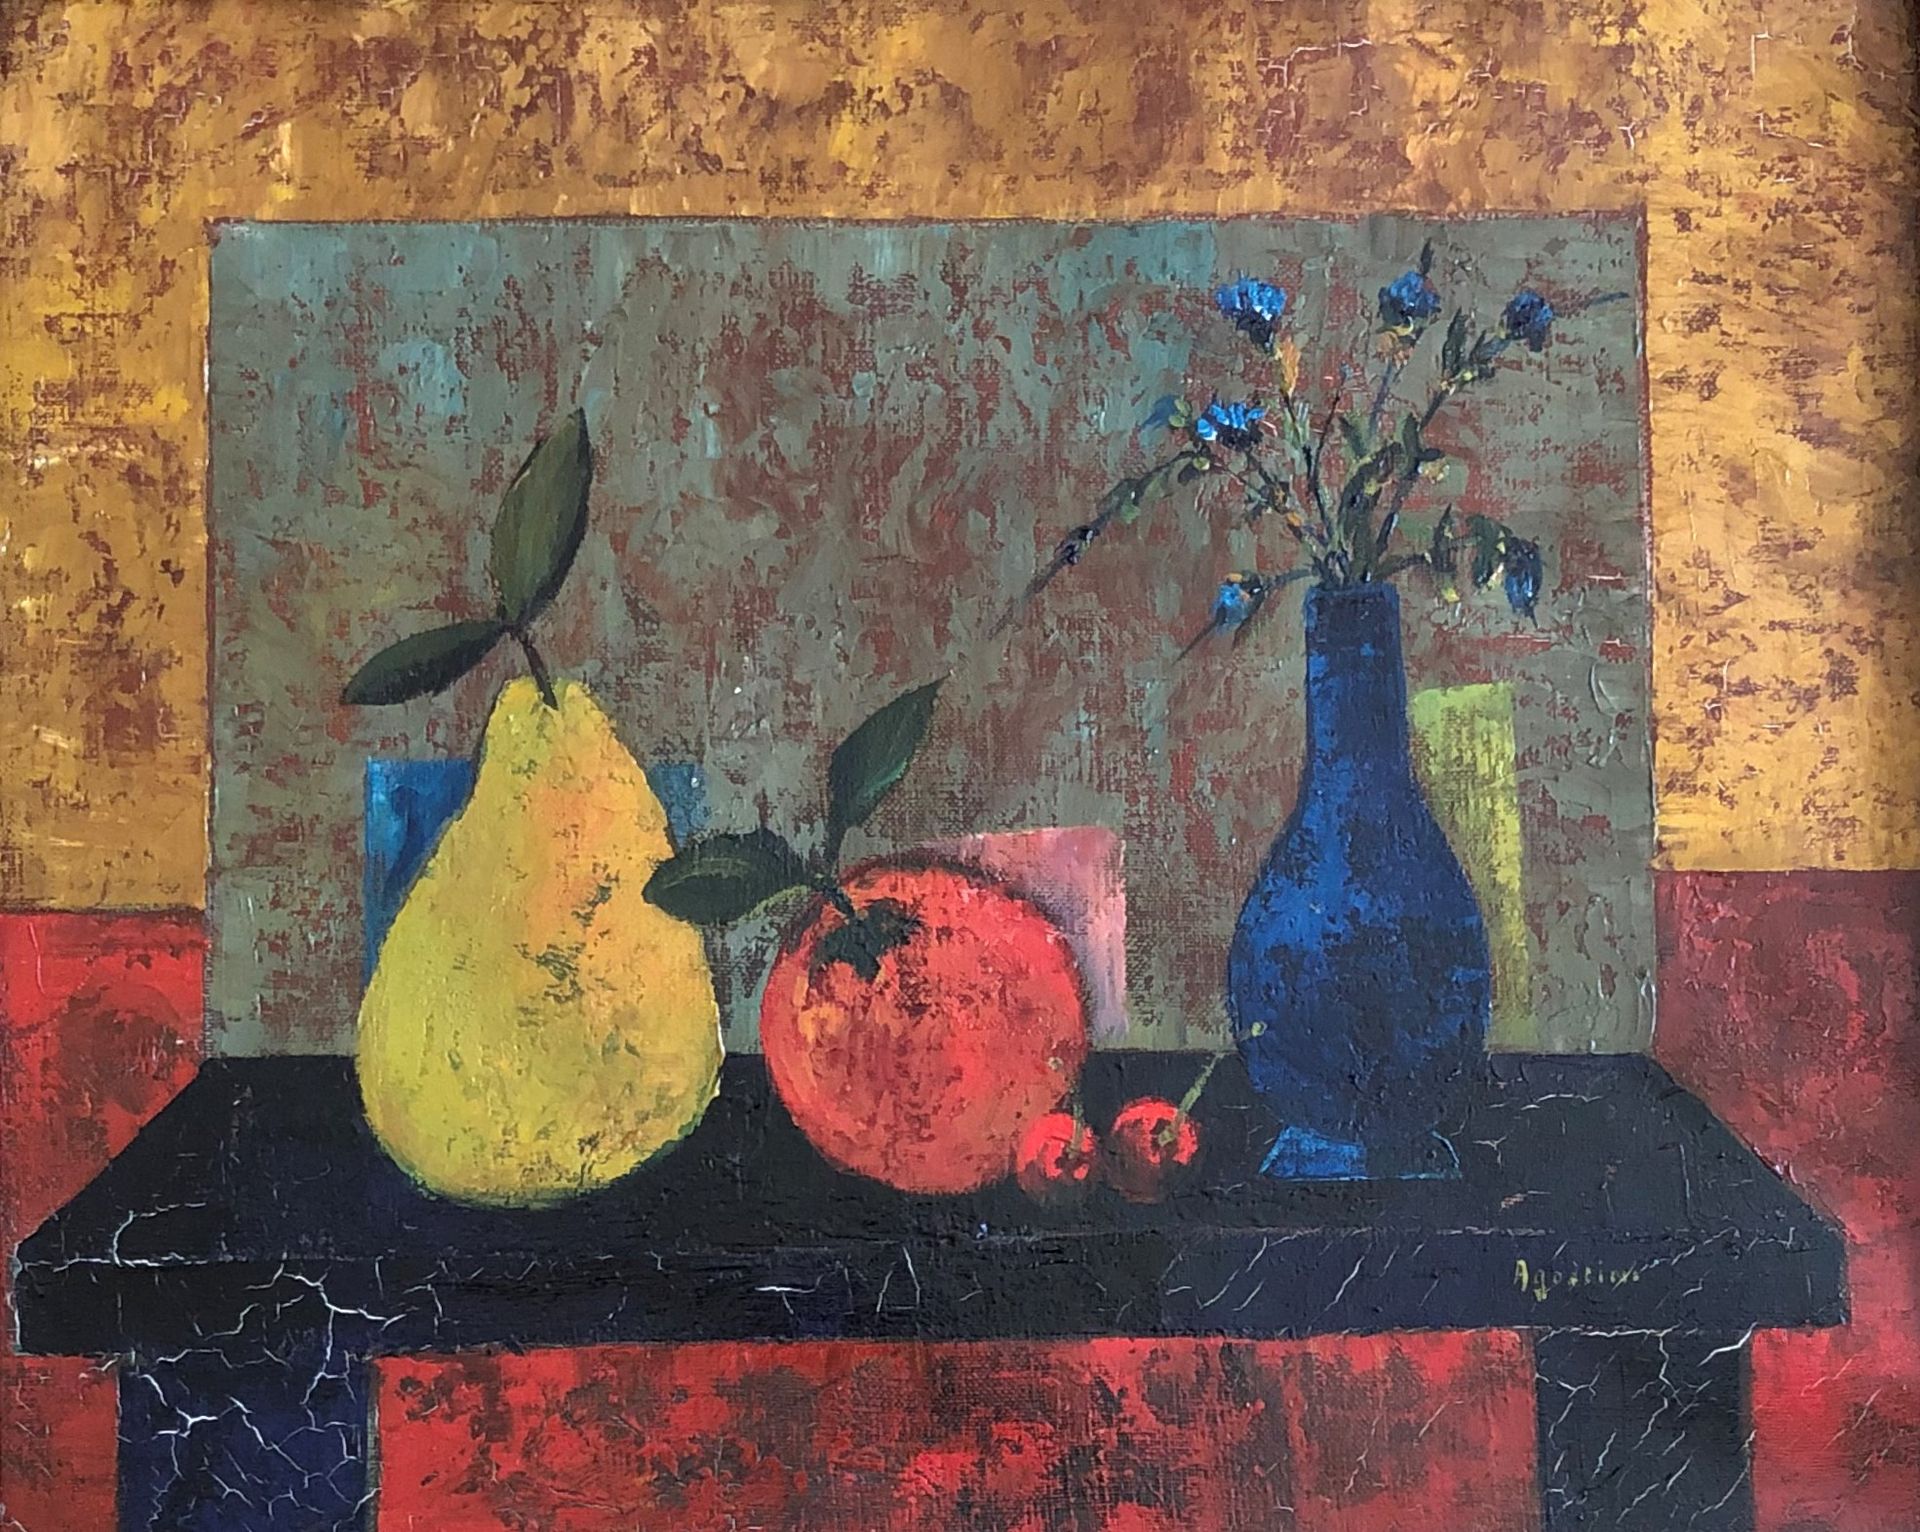 Null 托尼-阿戈斯蒂尼(1916-1990)

水果和蓝色花瓶的静物画

布面油画，右下角有签名。

裂缝

38 x 46 厘米